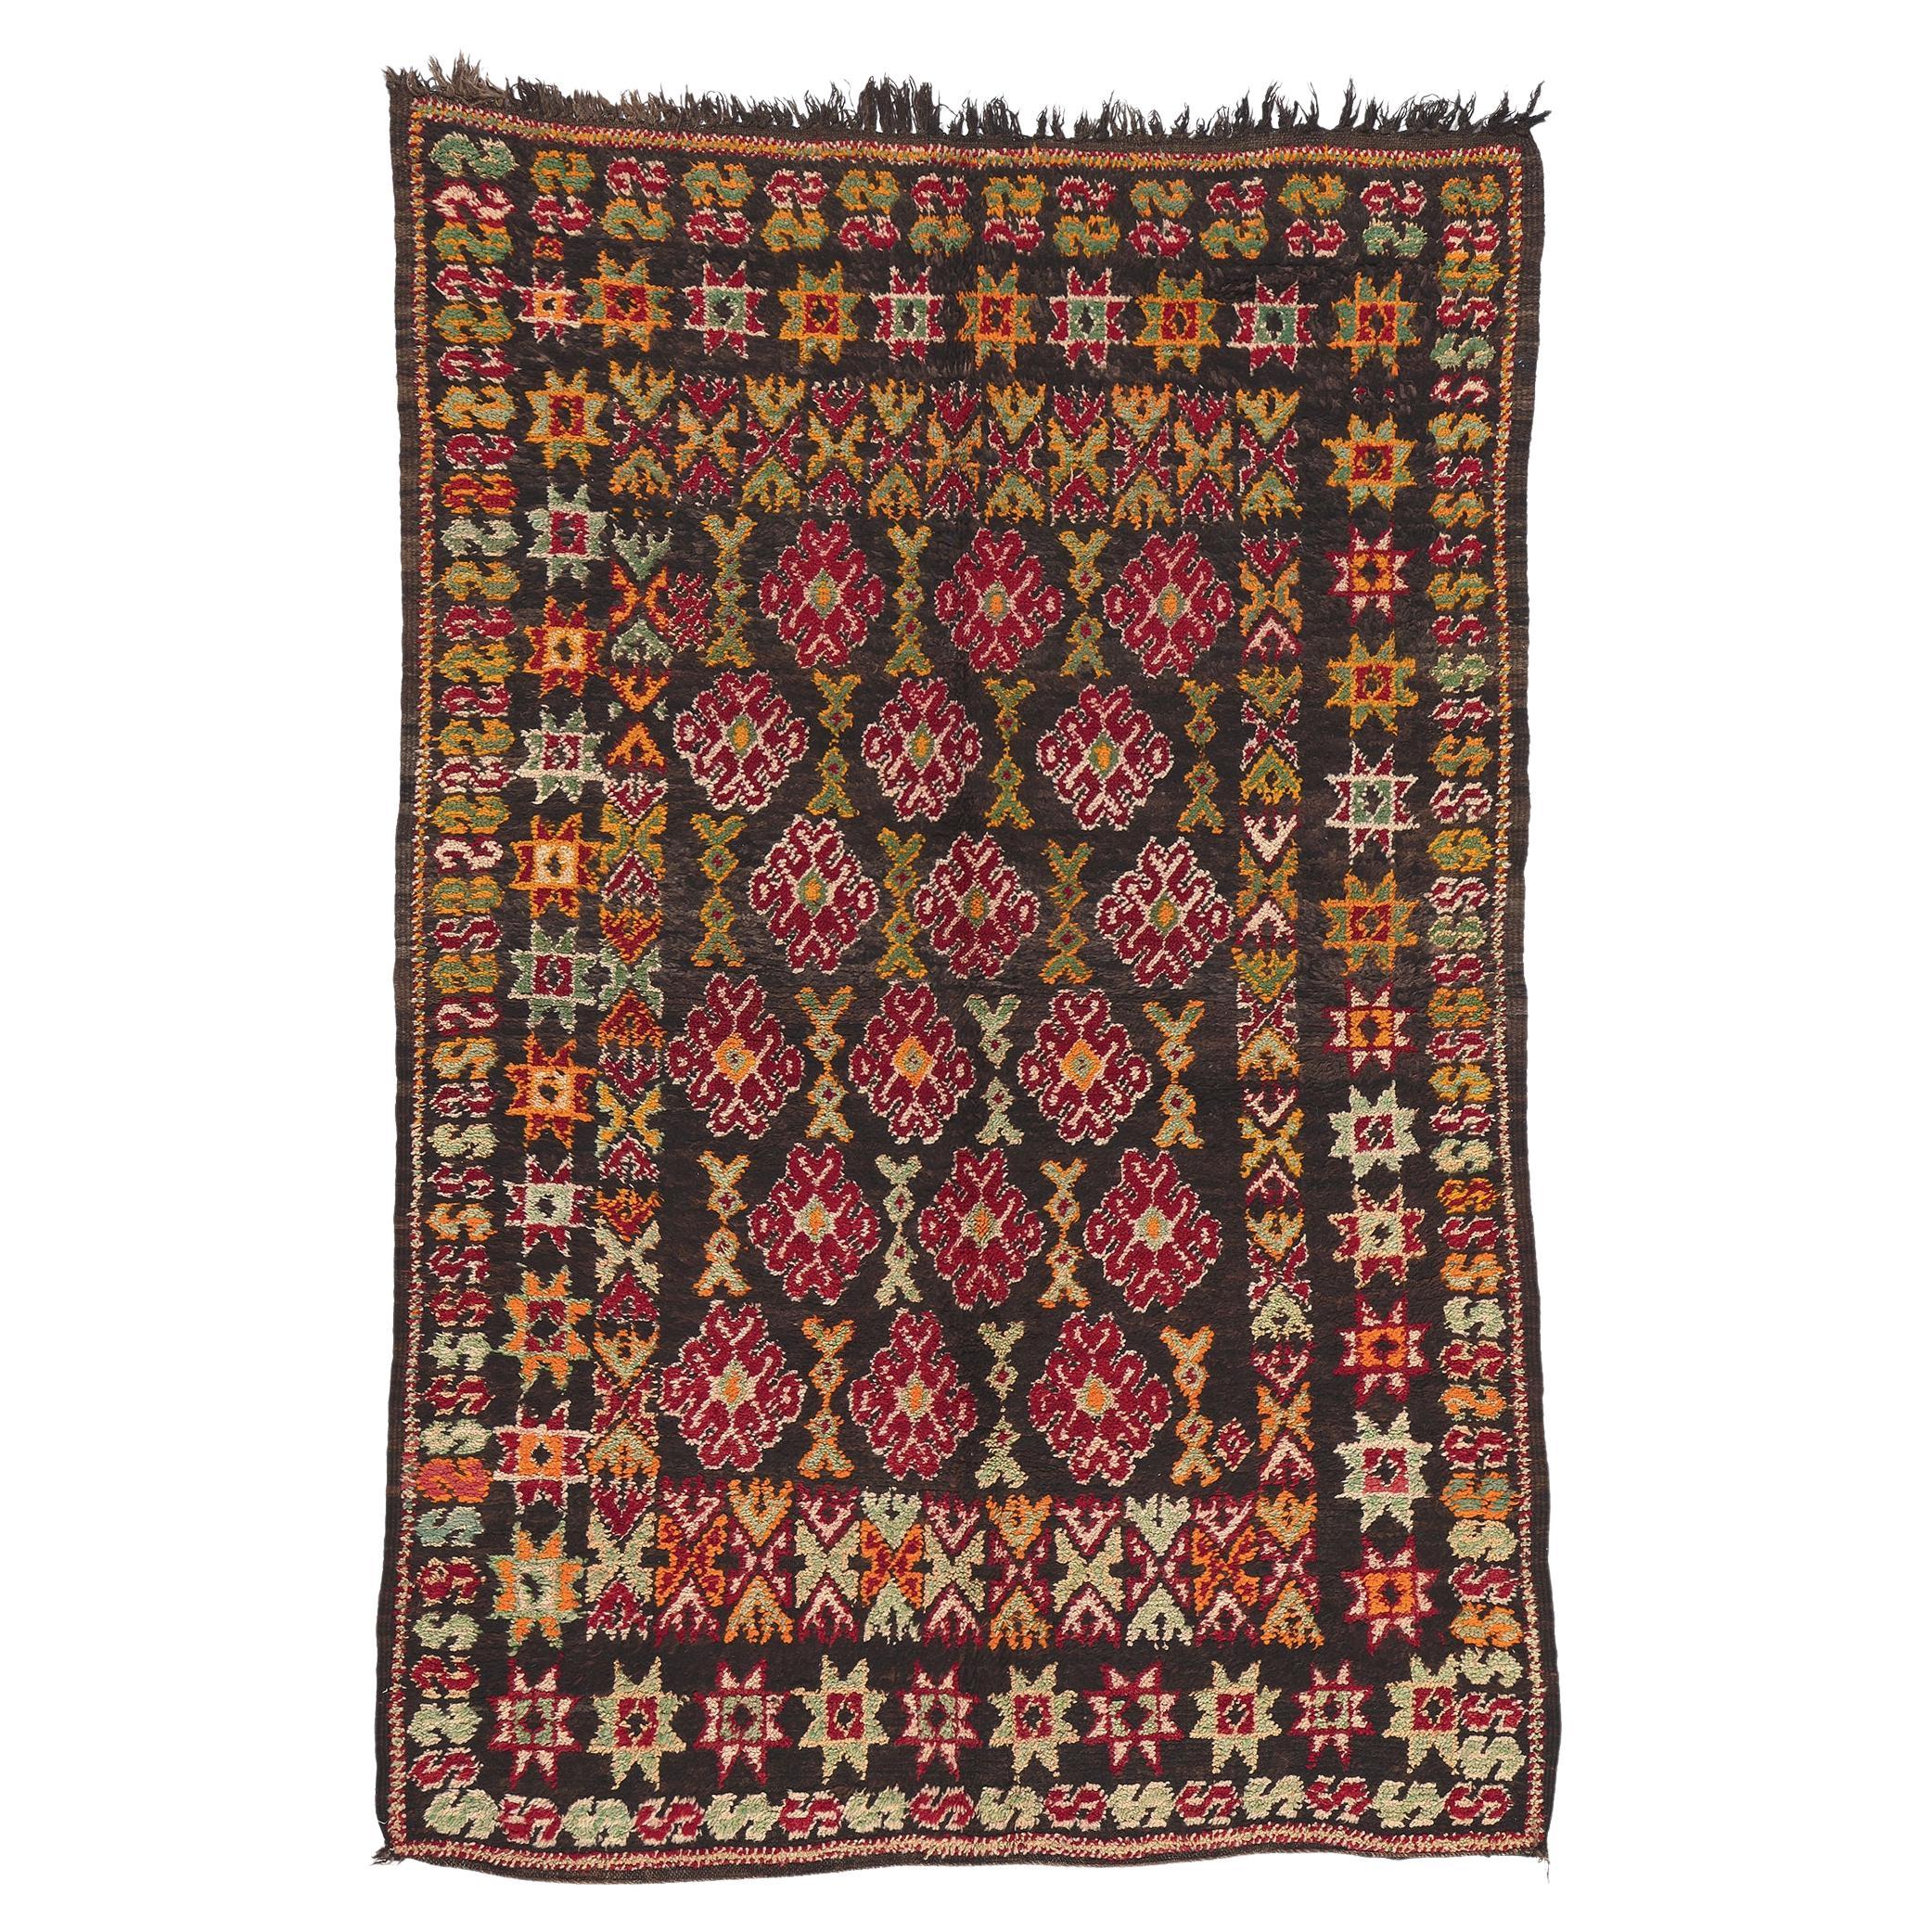 Vintage Beni MGuild Moroccan Rug , Tribal Enchantment Meets Midcentury Modern